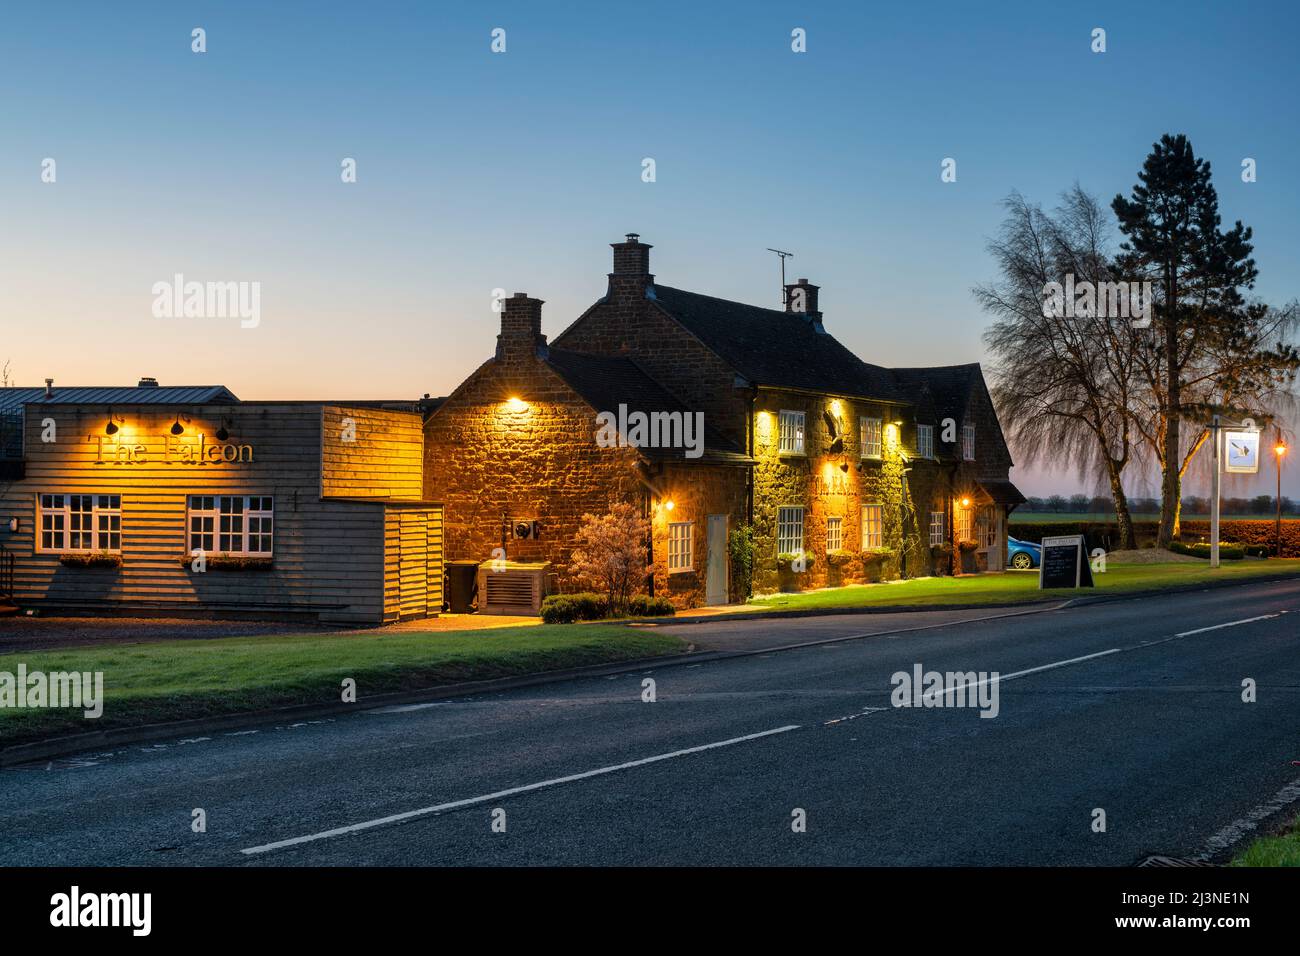 The Falcon Pub at dawn. Warmington, Warwickshire, England Stock Photo